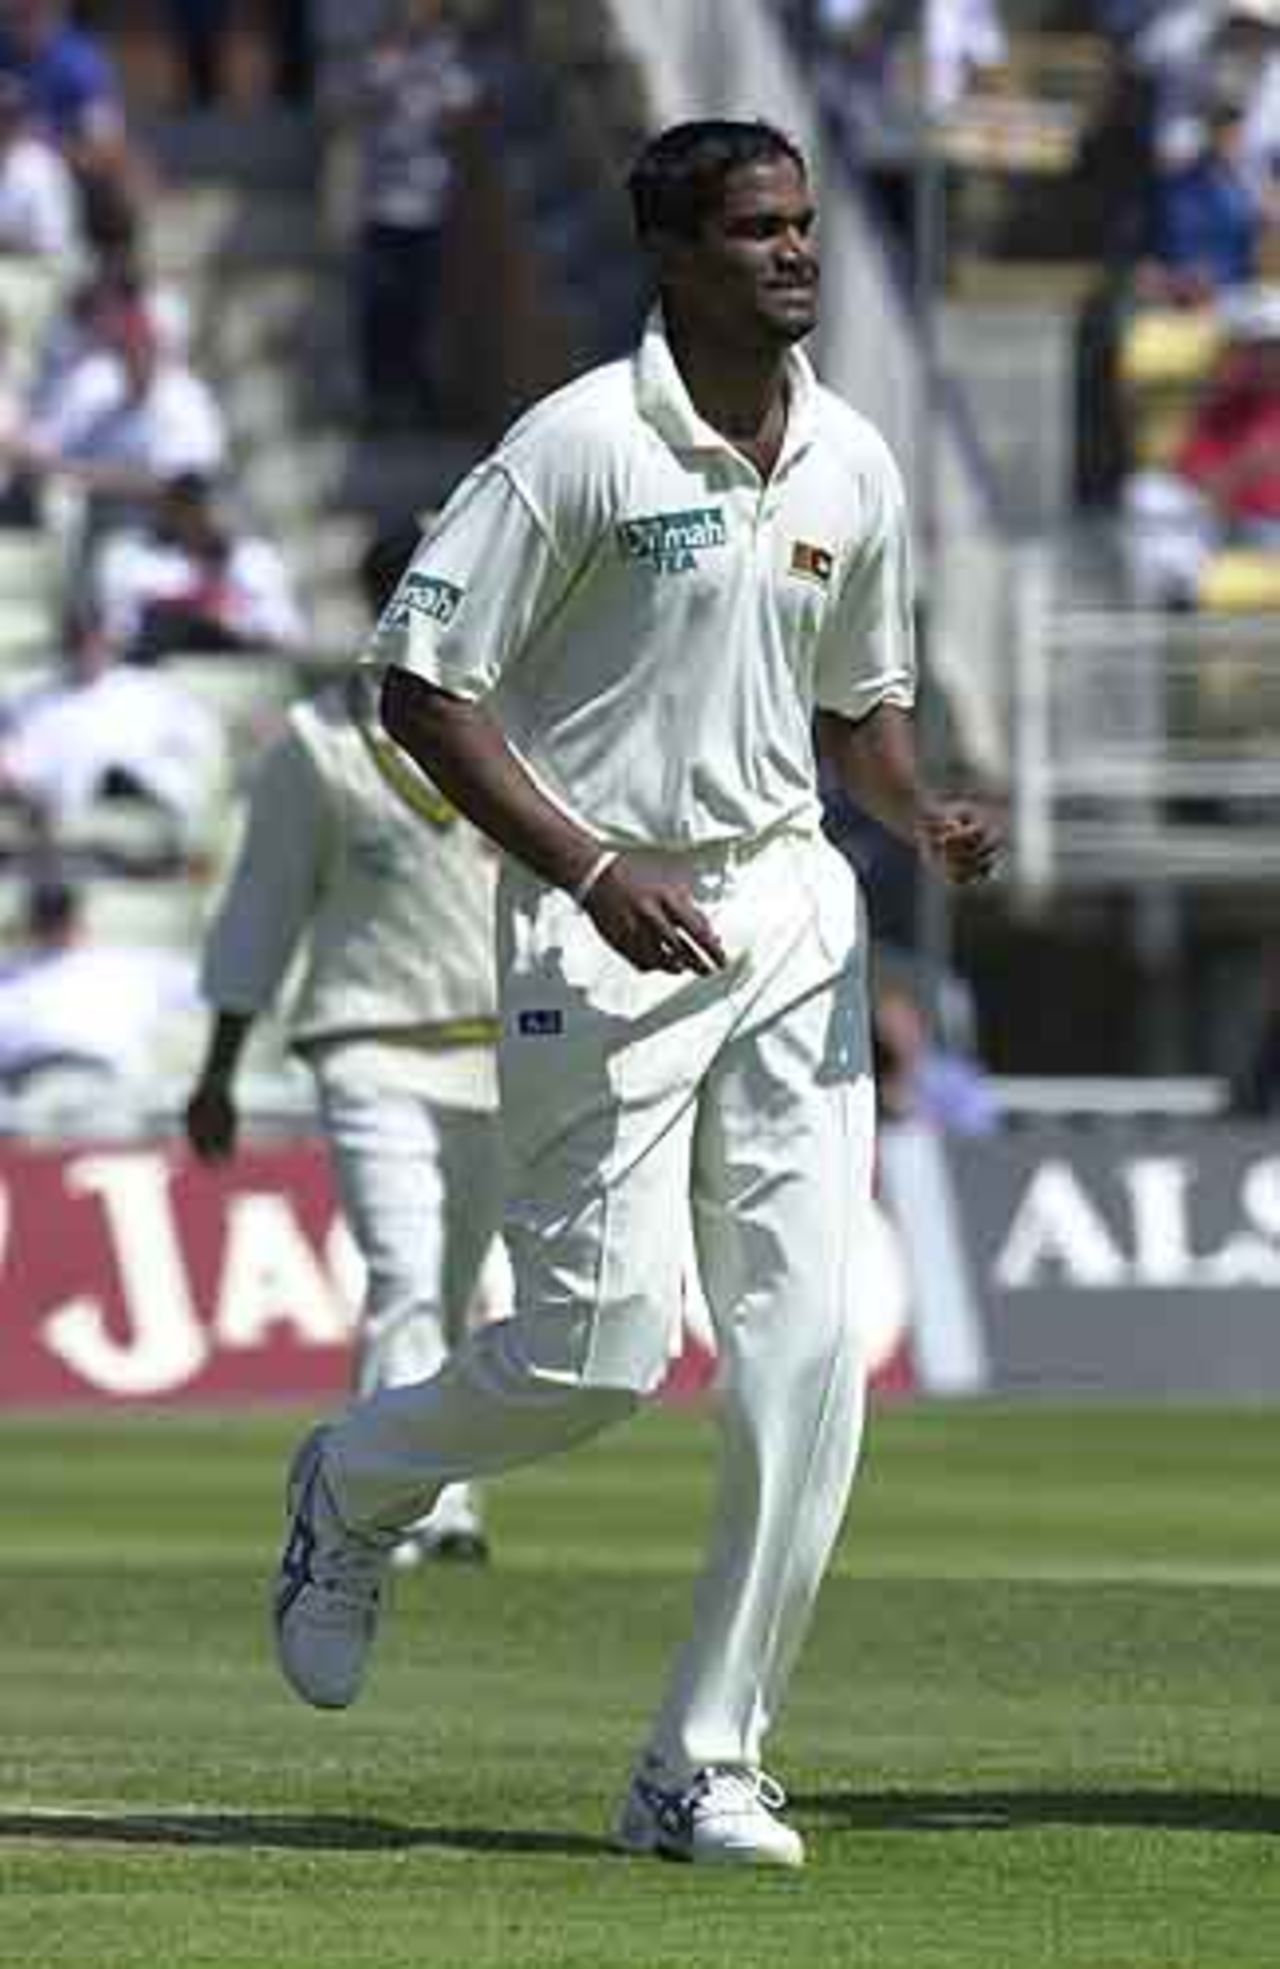 Nuwan Zoysa has just got Tudor out, England v Sri Lanka, second Test, Edgbaston 2002